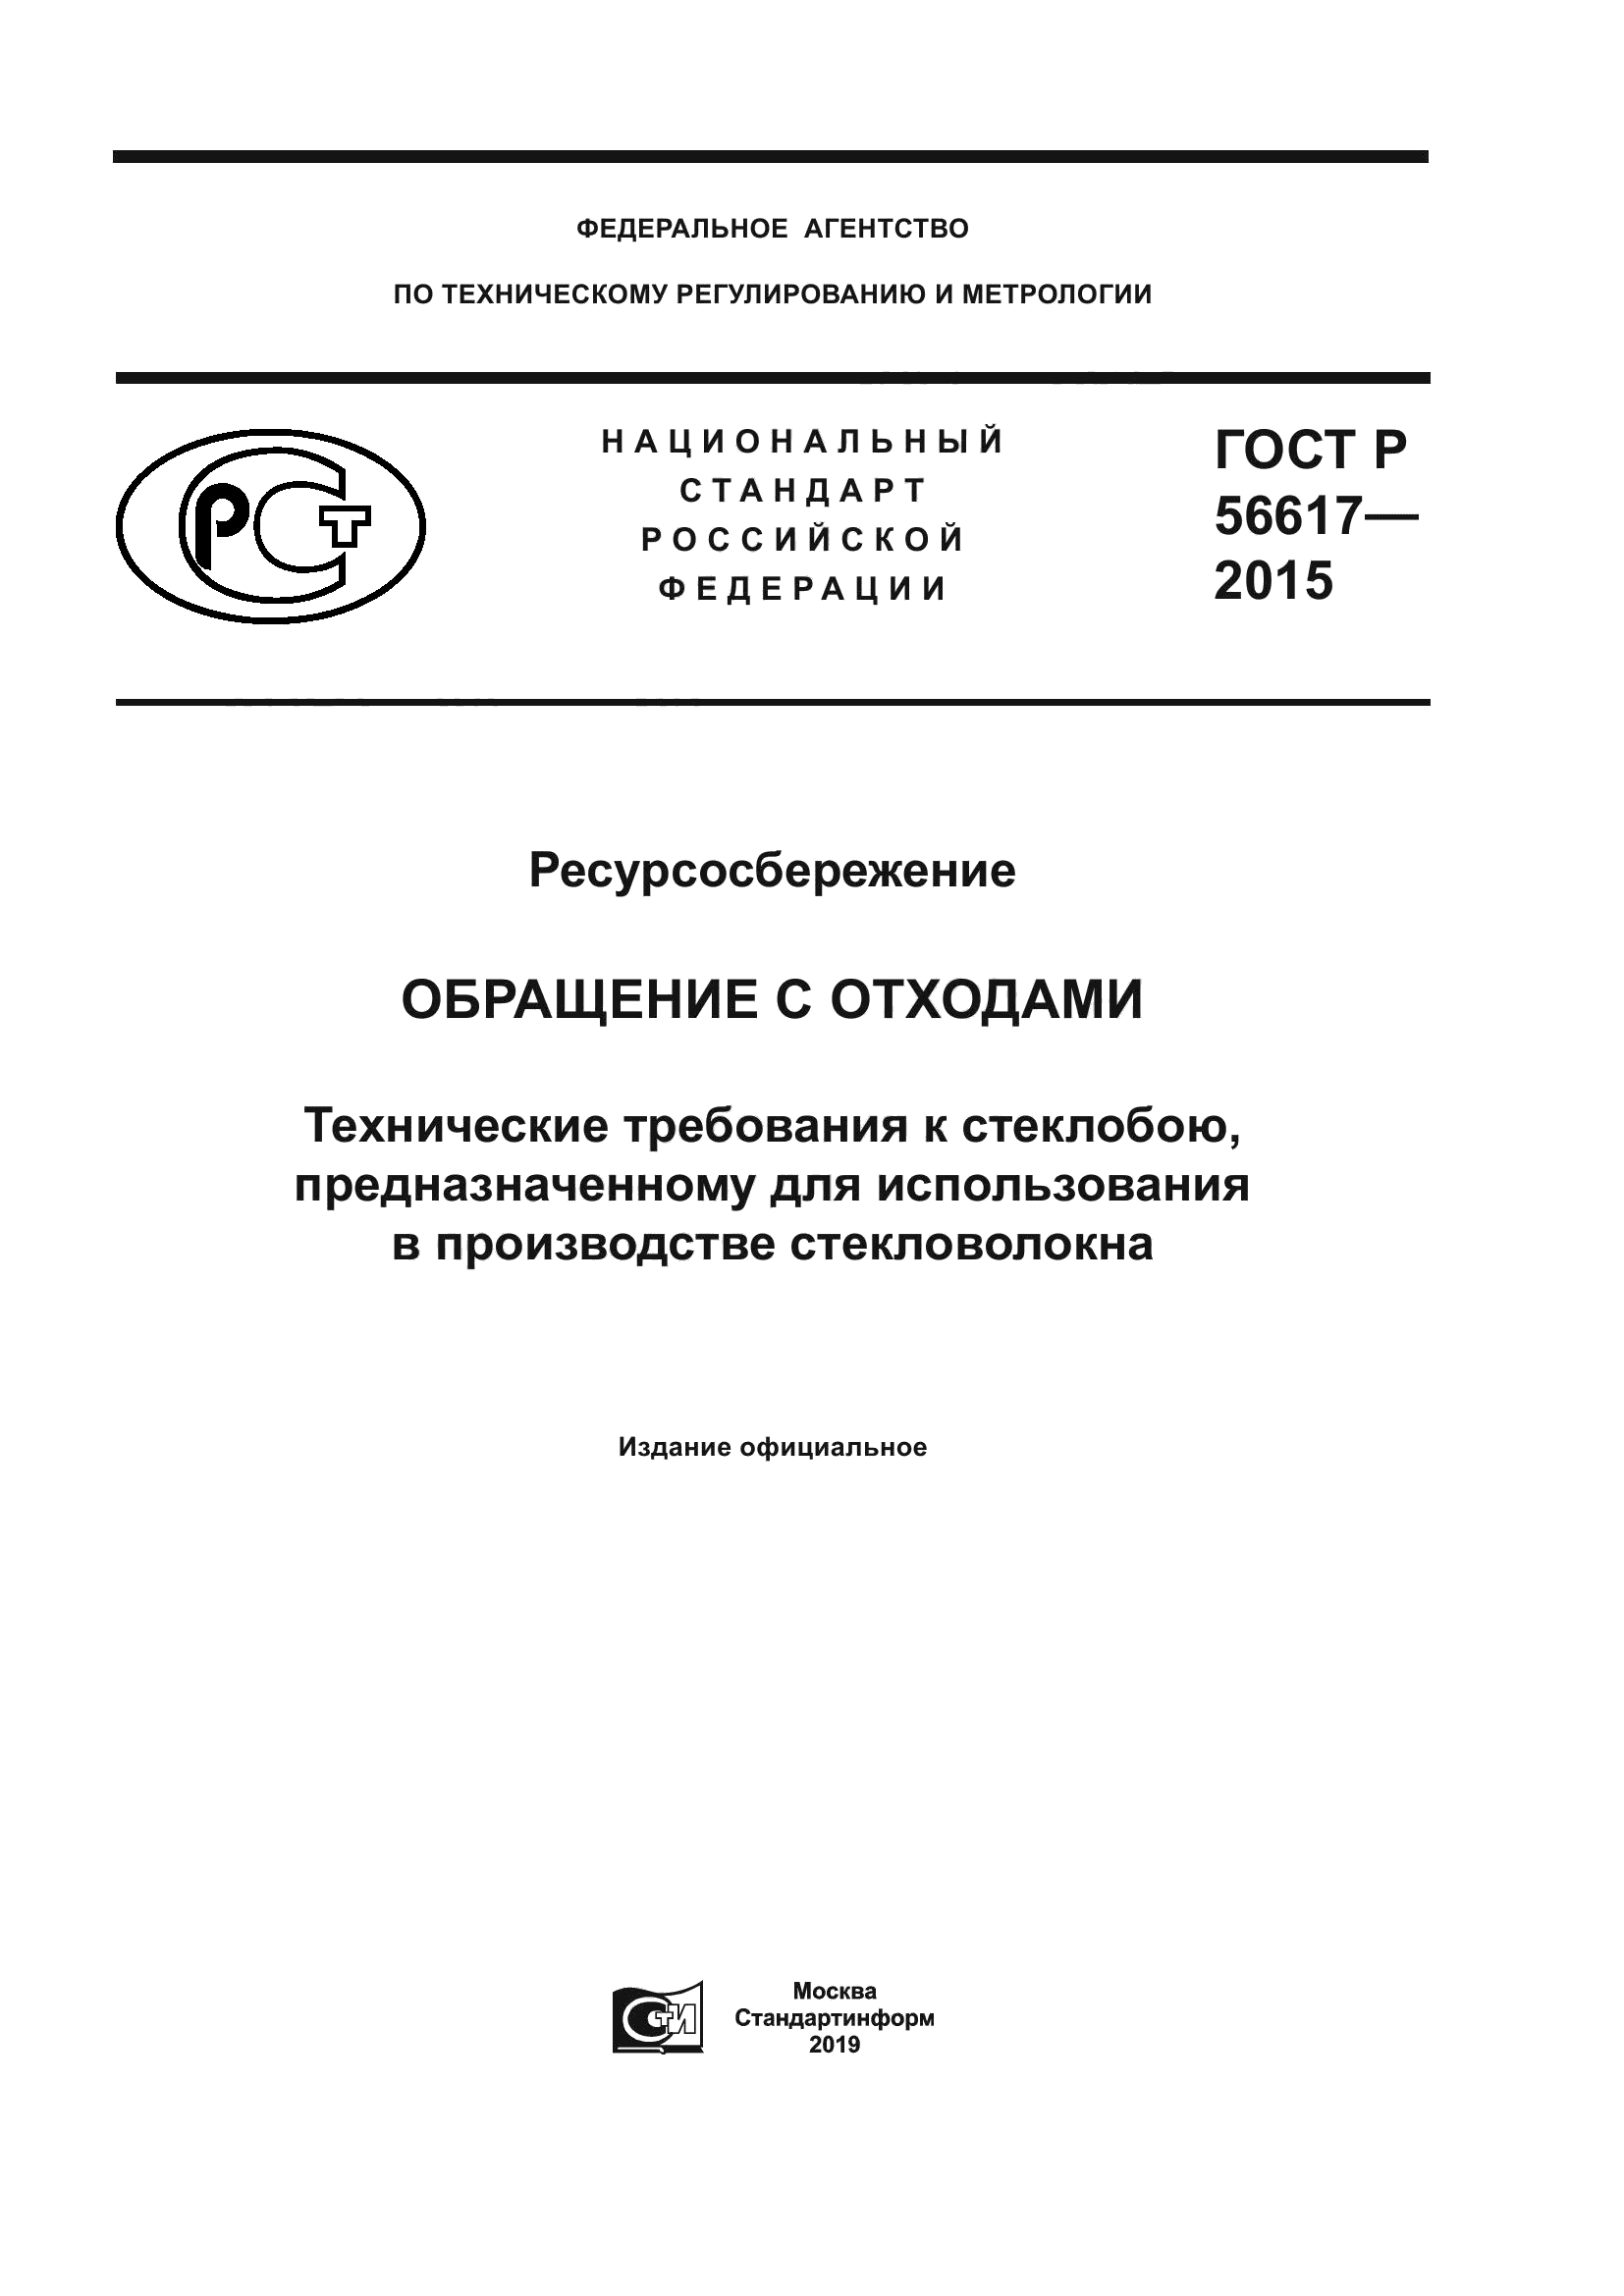 ГОСТ Р 56617-2015